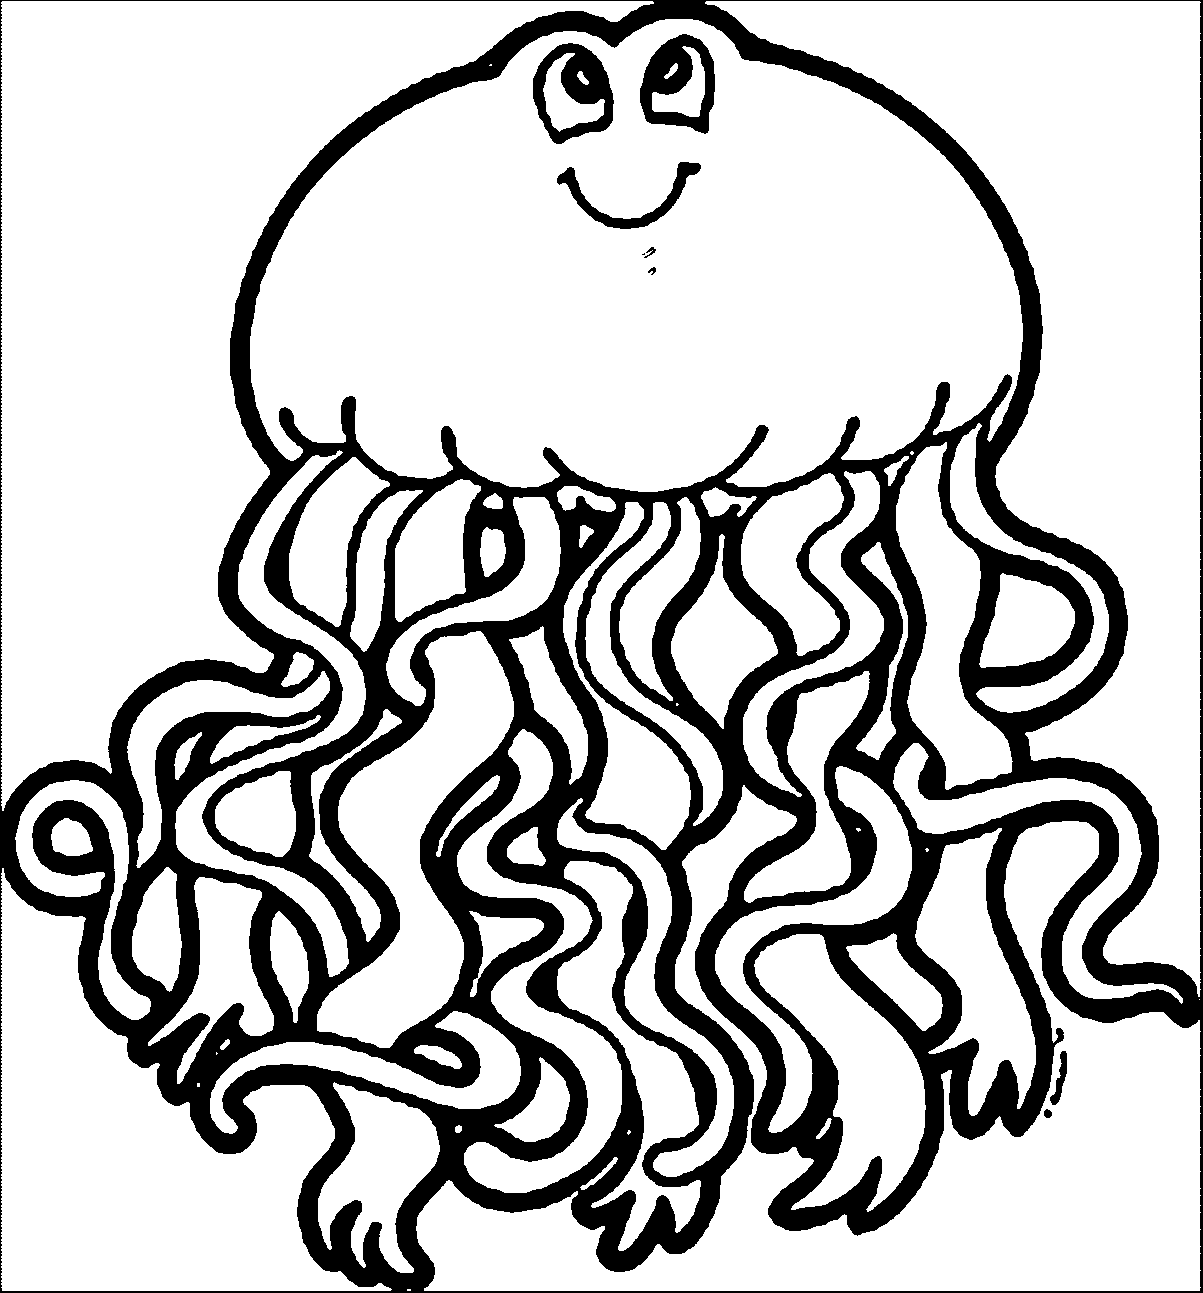 Jellyfish clip art bdcr9qdt9 wecoloringpage